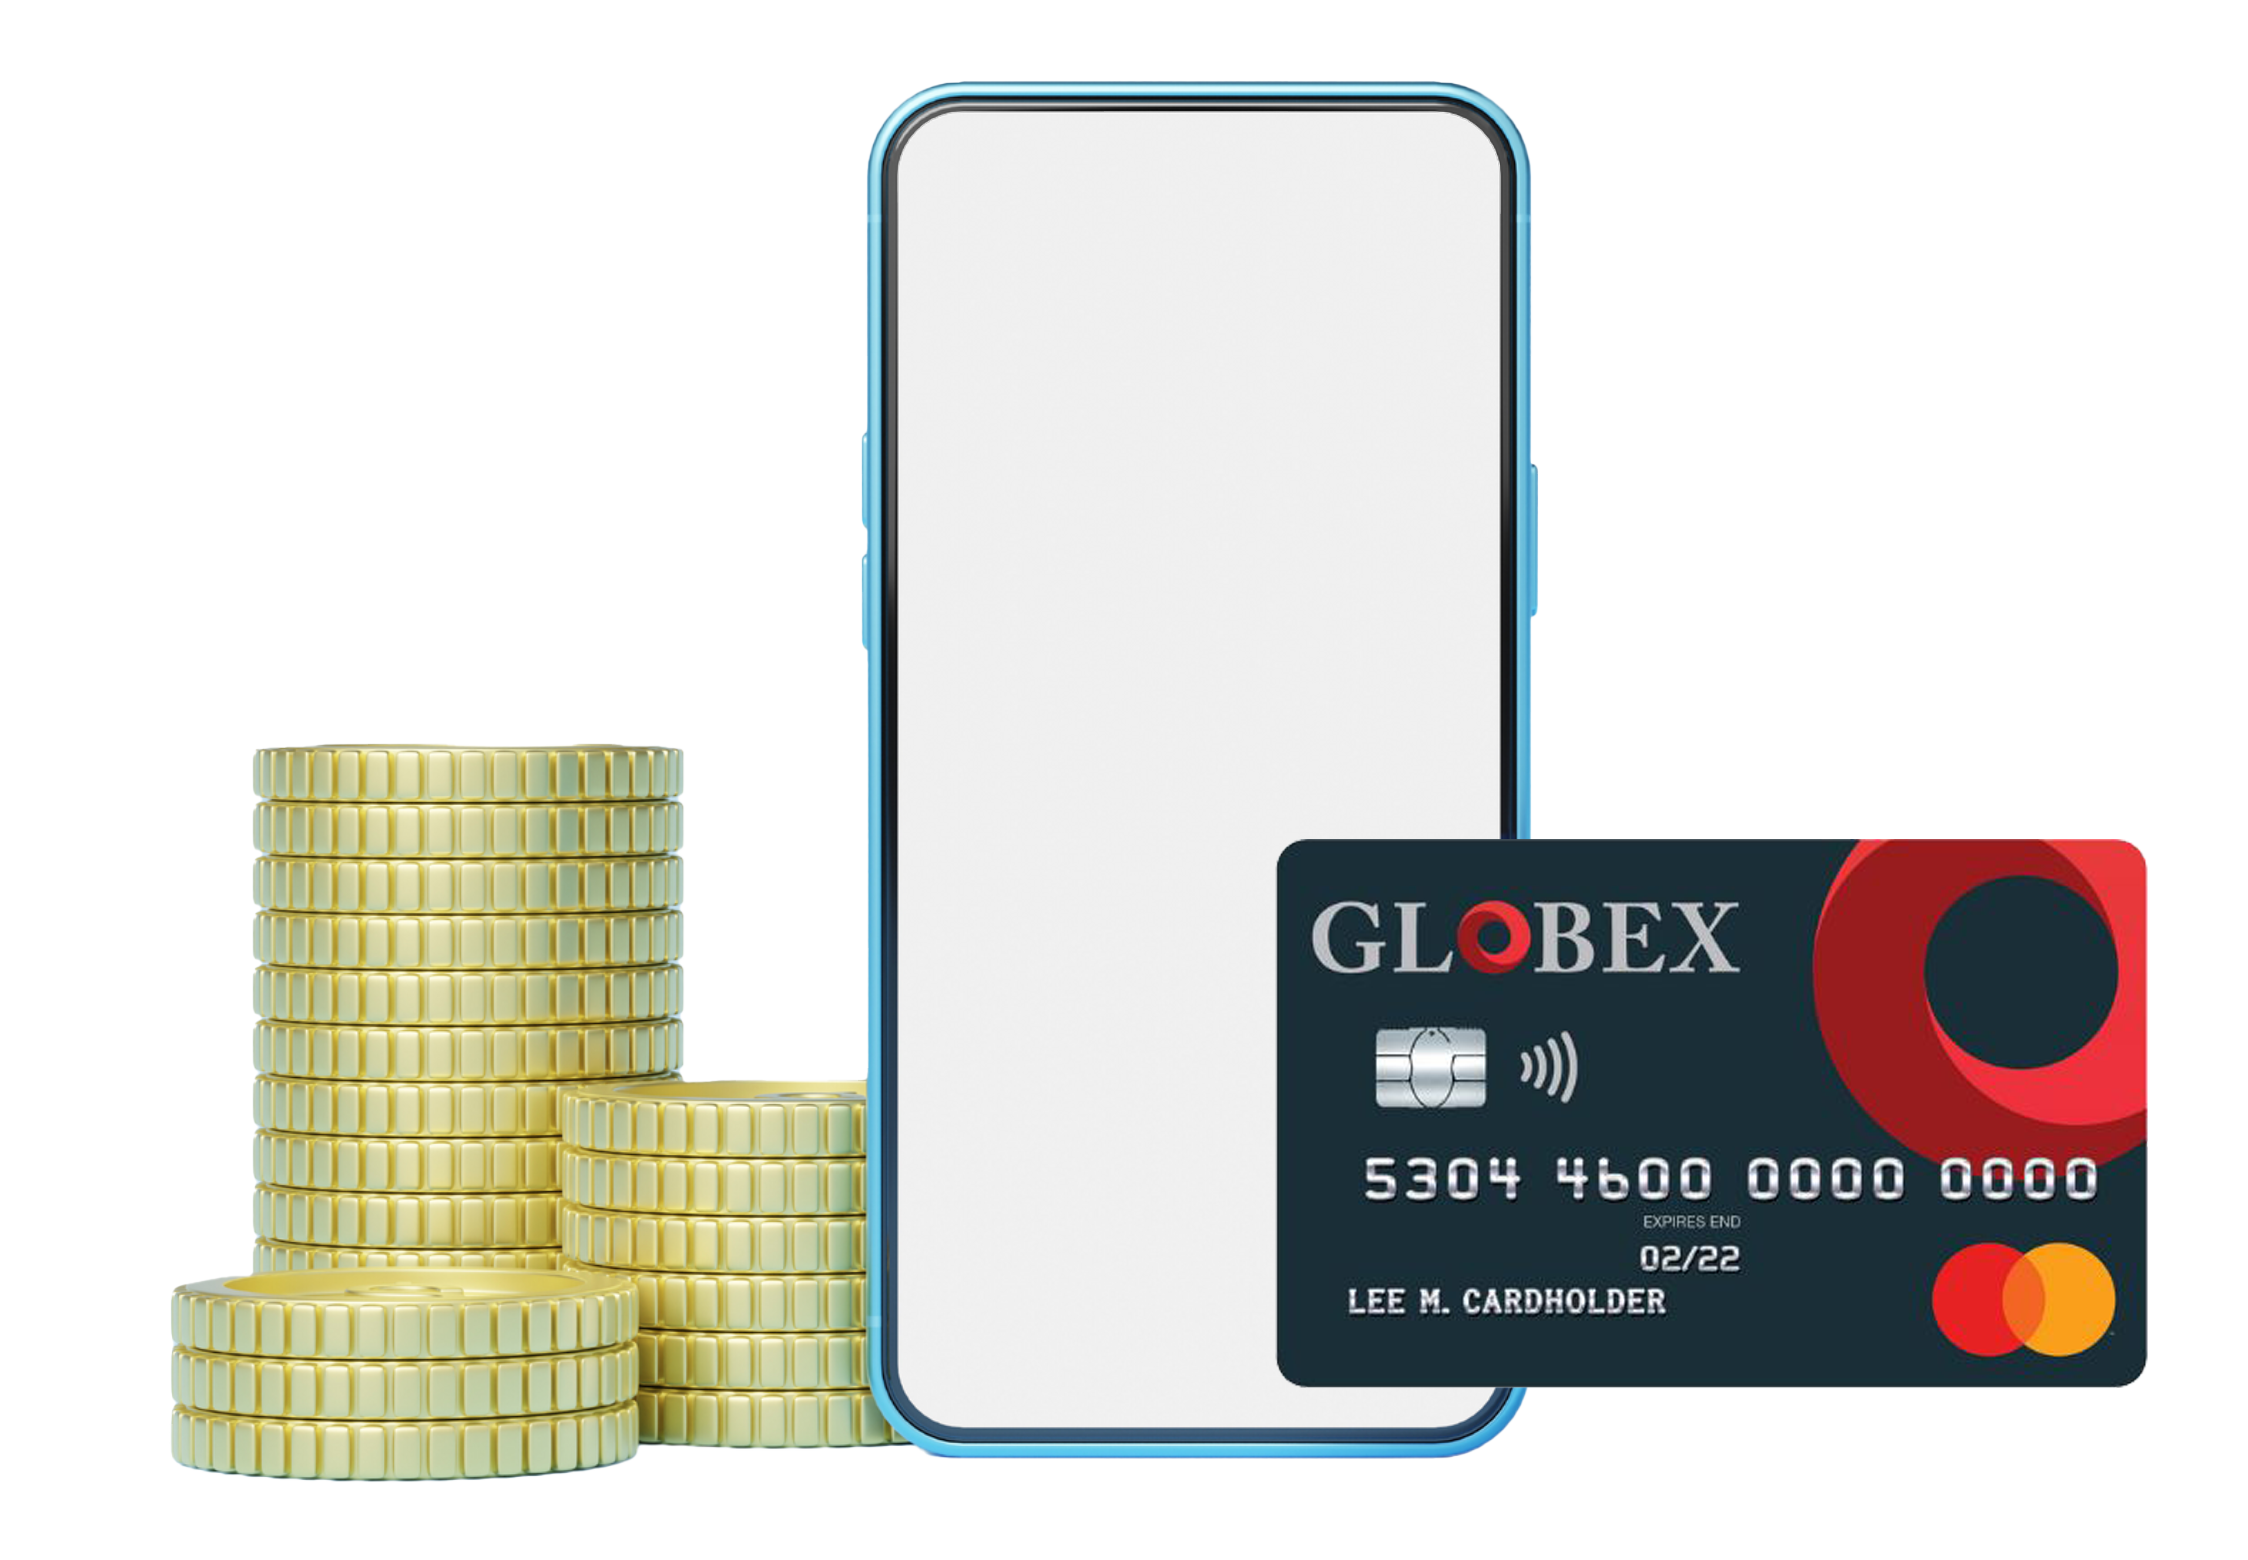 eglobex financial app